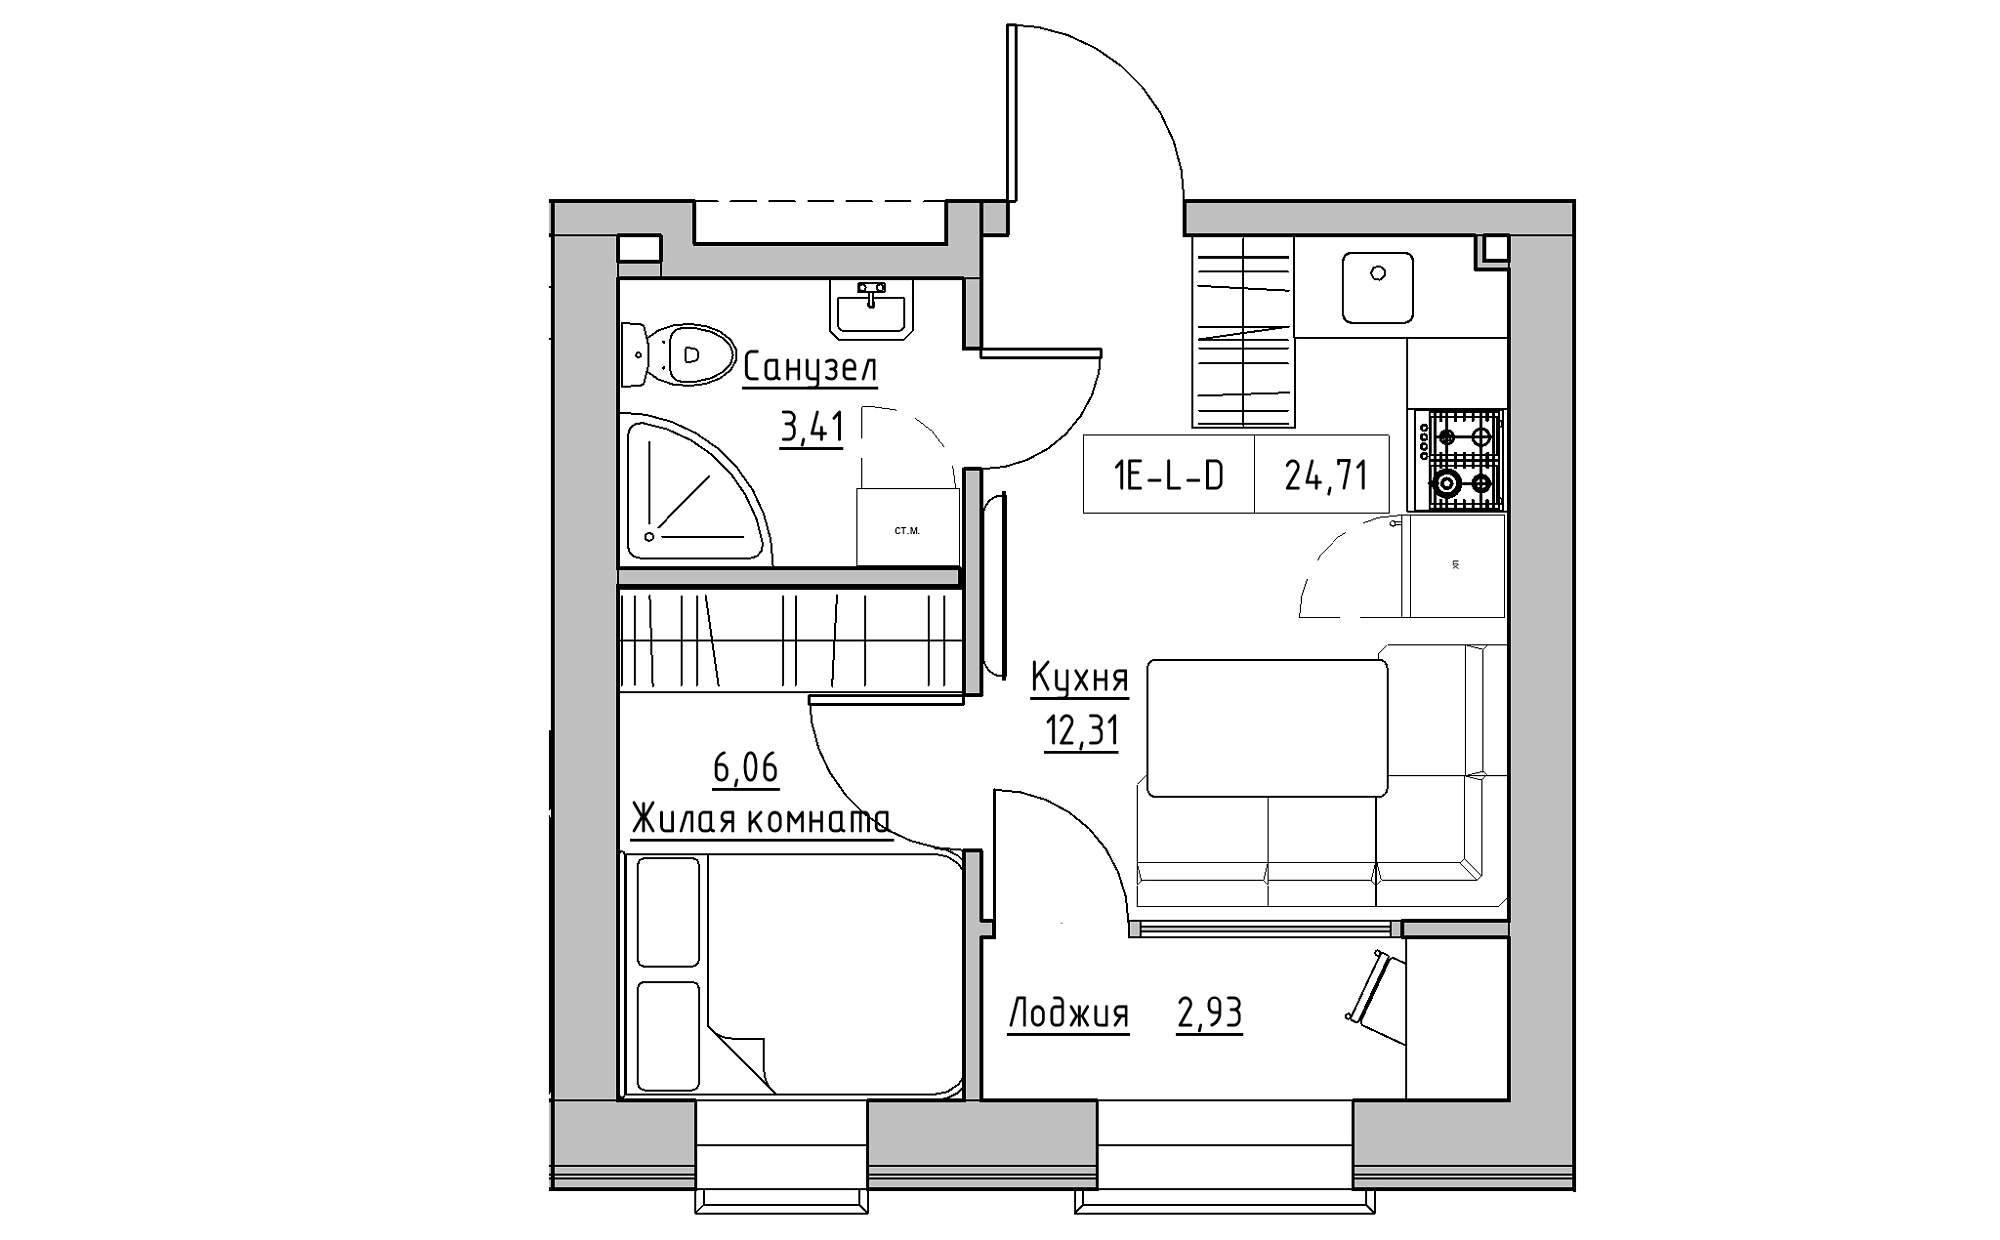 Planning 1-rm flats area 24.71m2, KS-022-02/0002.